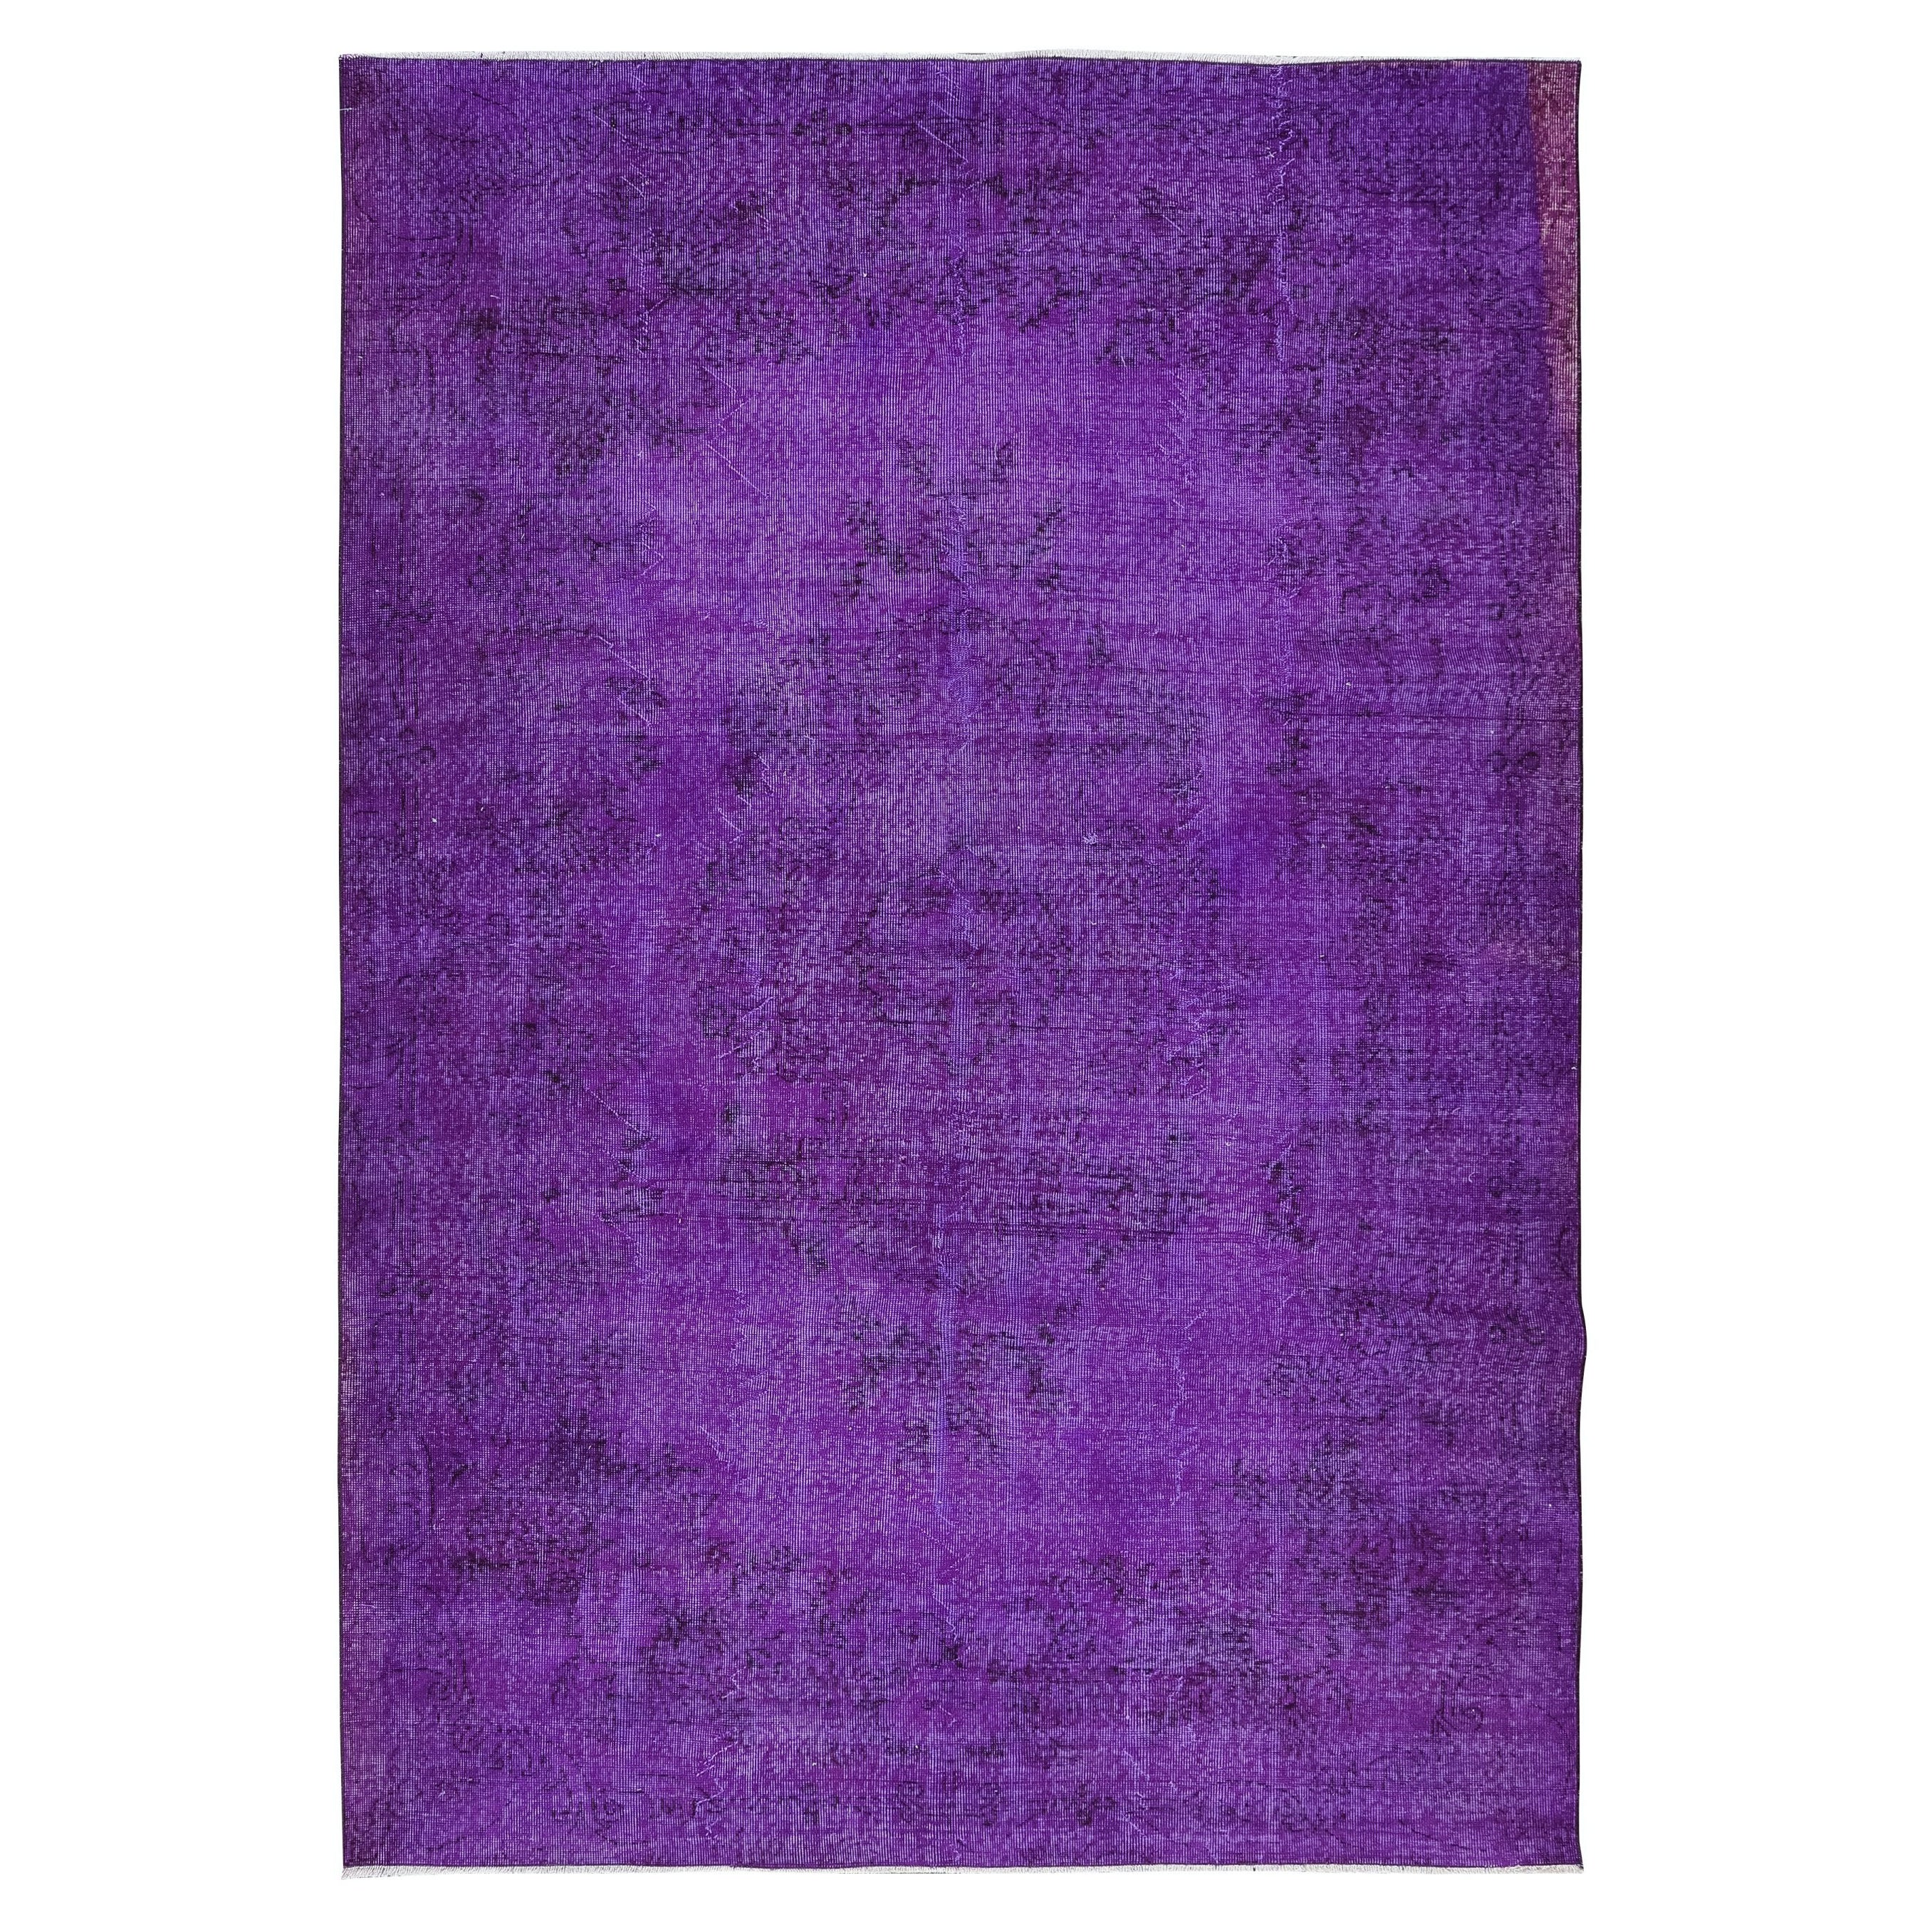 6.7x10 Ft Handmade Turkish Rug, Modern Violet Purple Carpet, Bohemian Home Decor For Sale